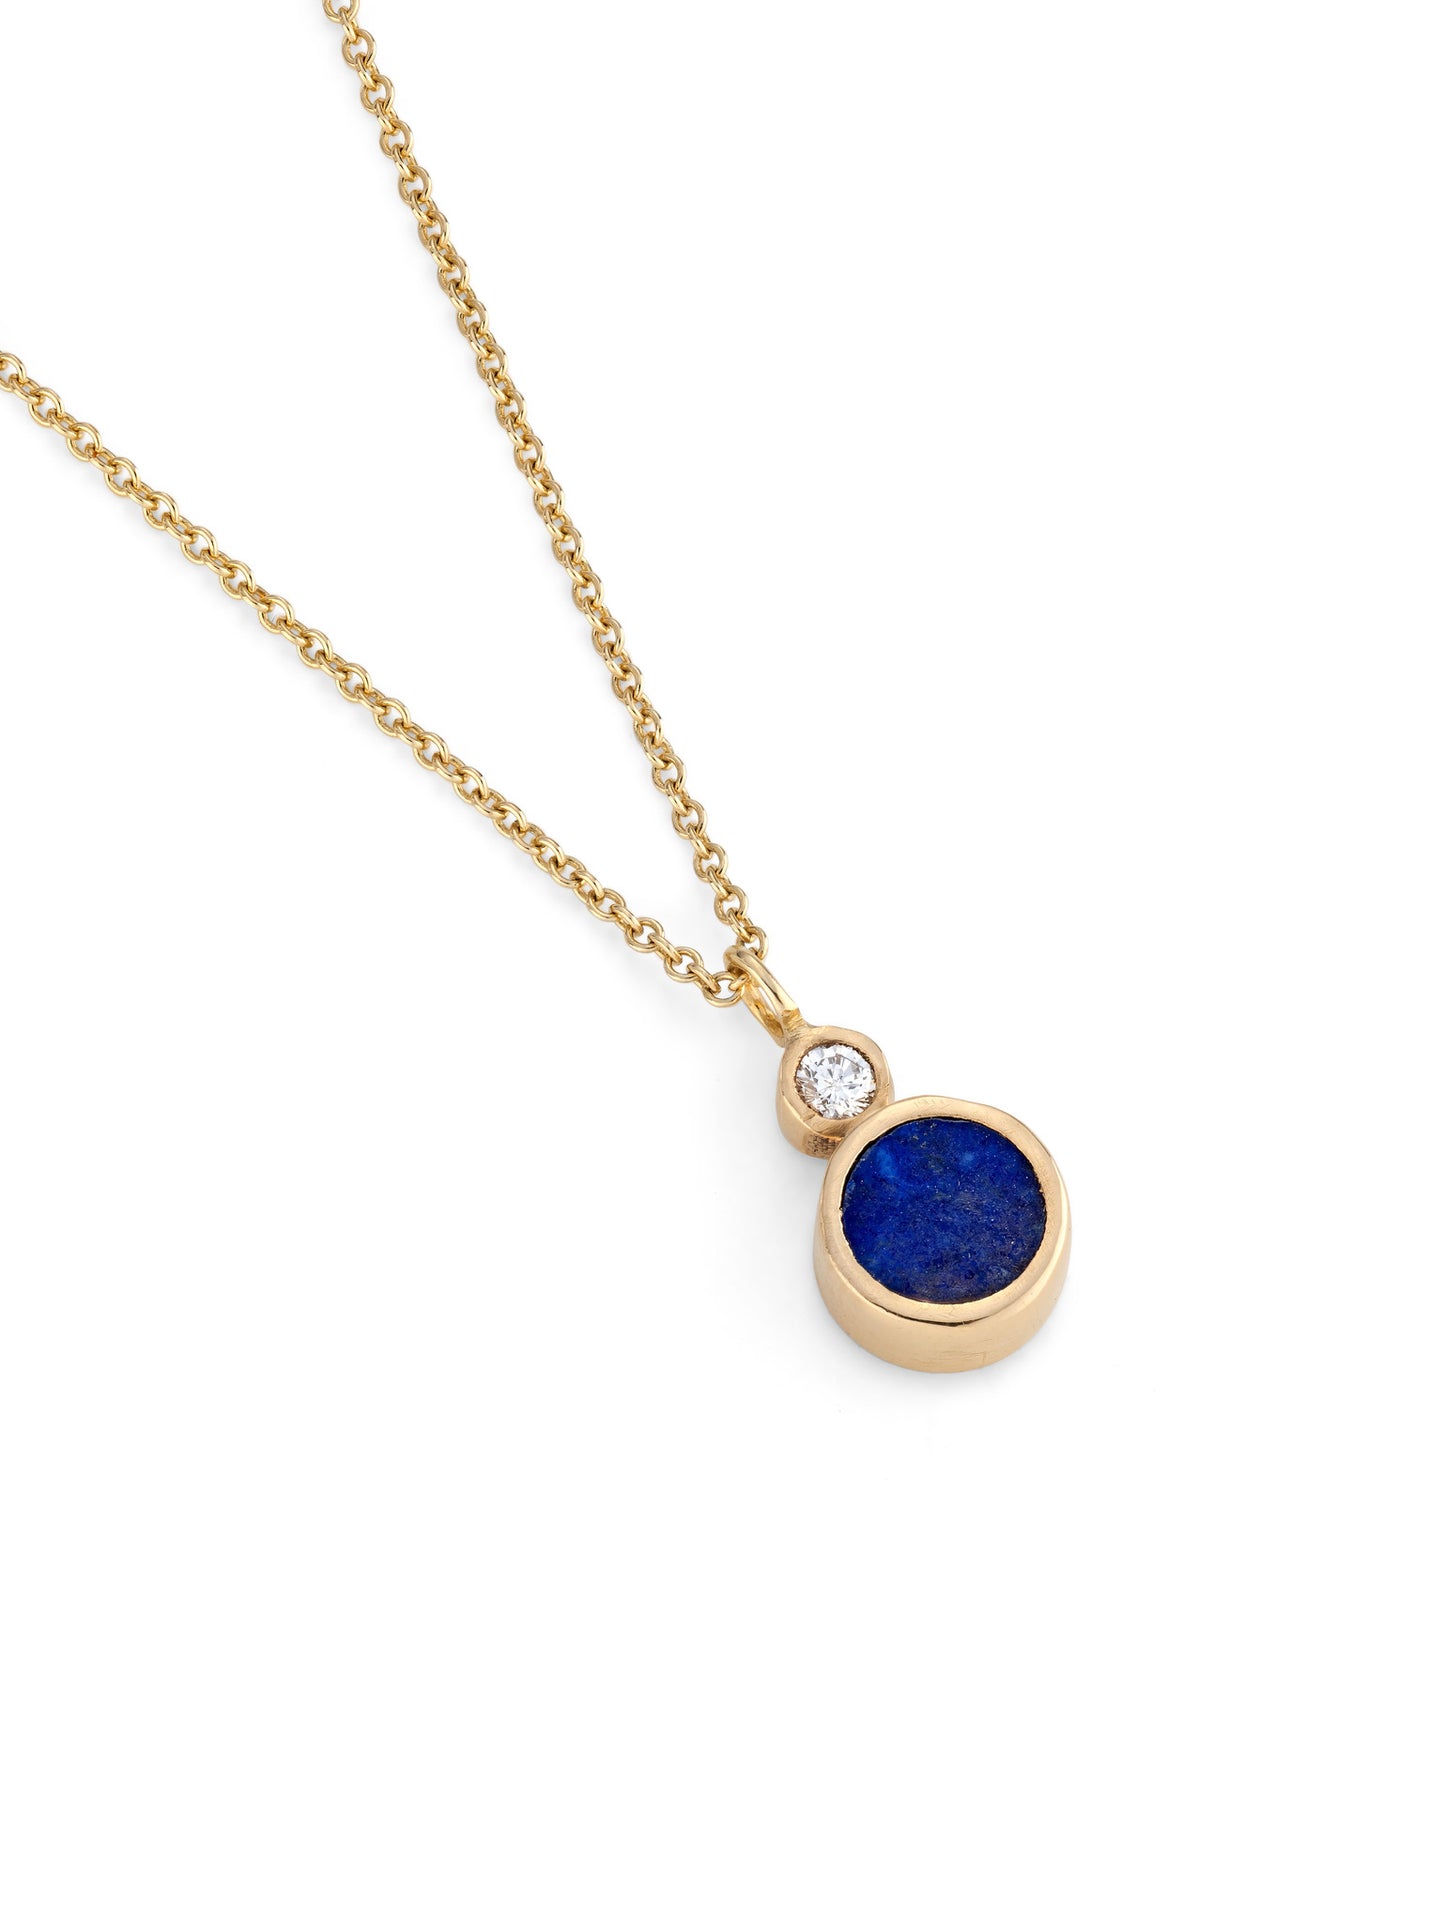 Stellar blue Lapis Lazuli and diamond necklace